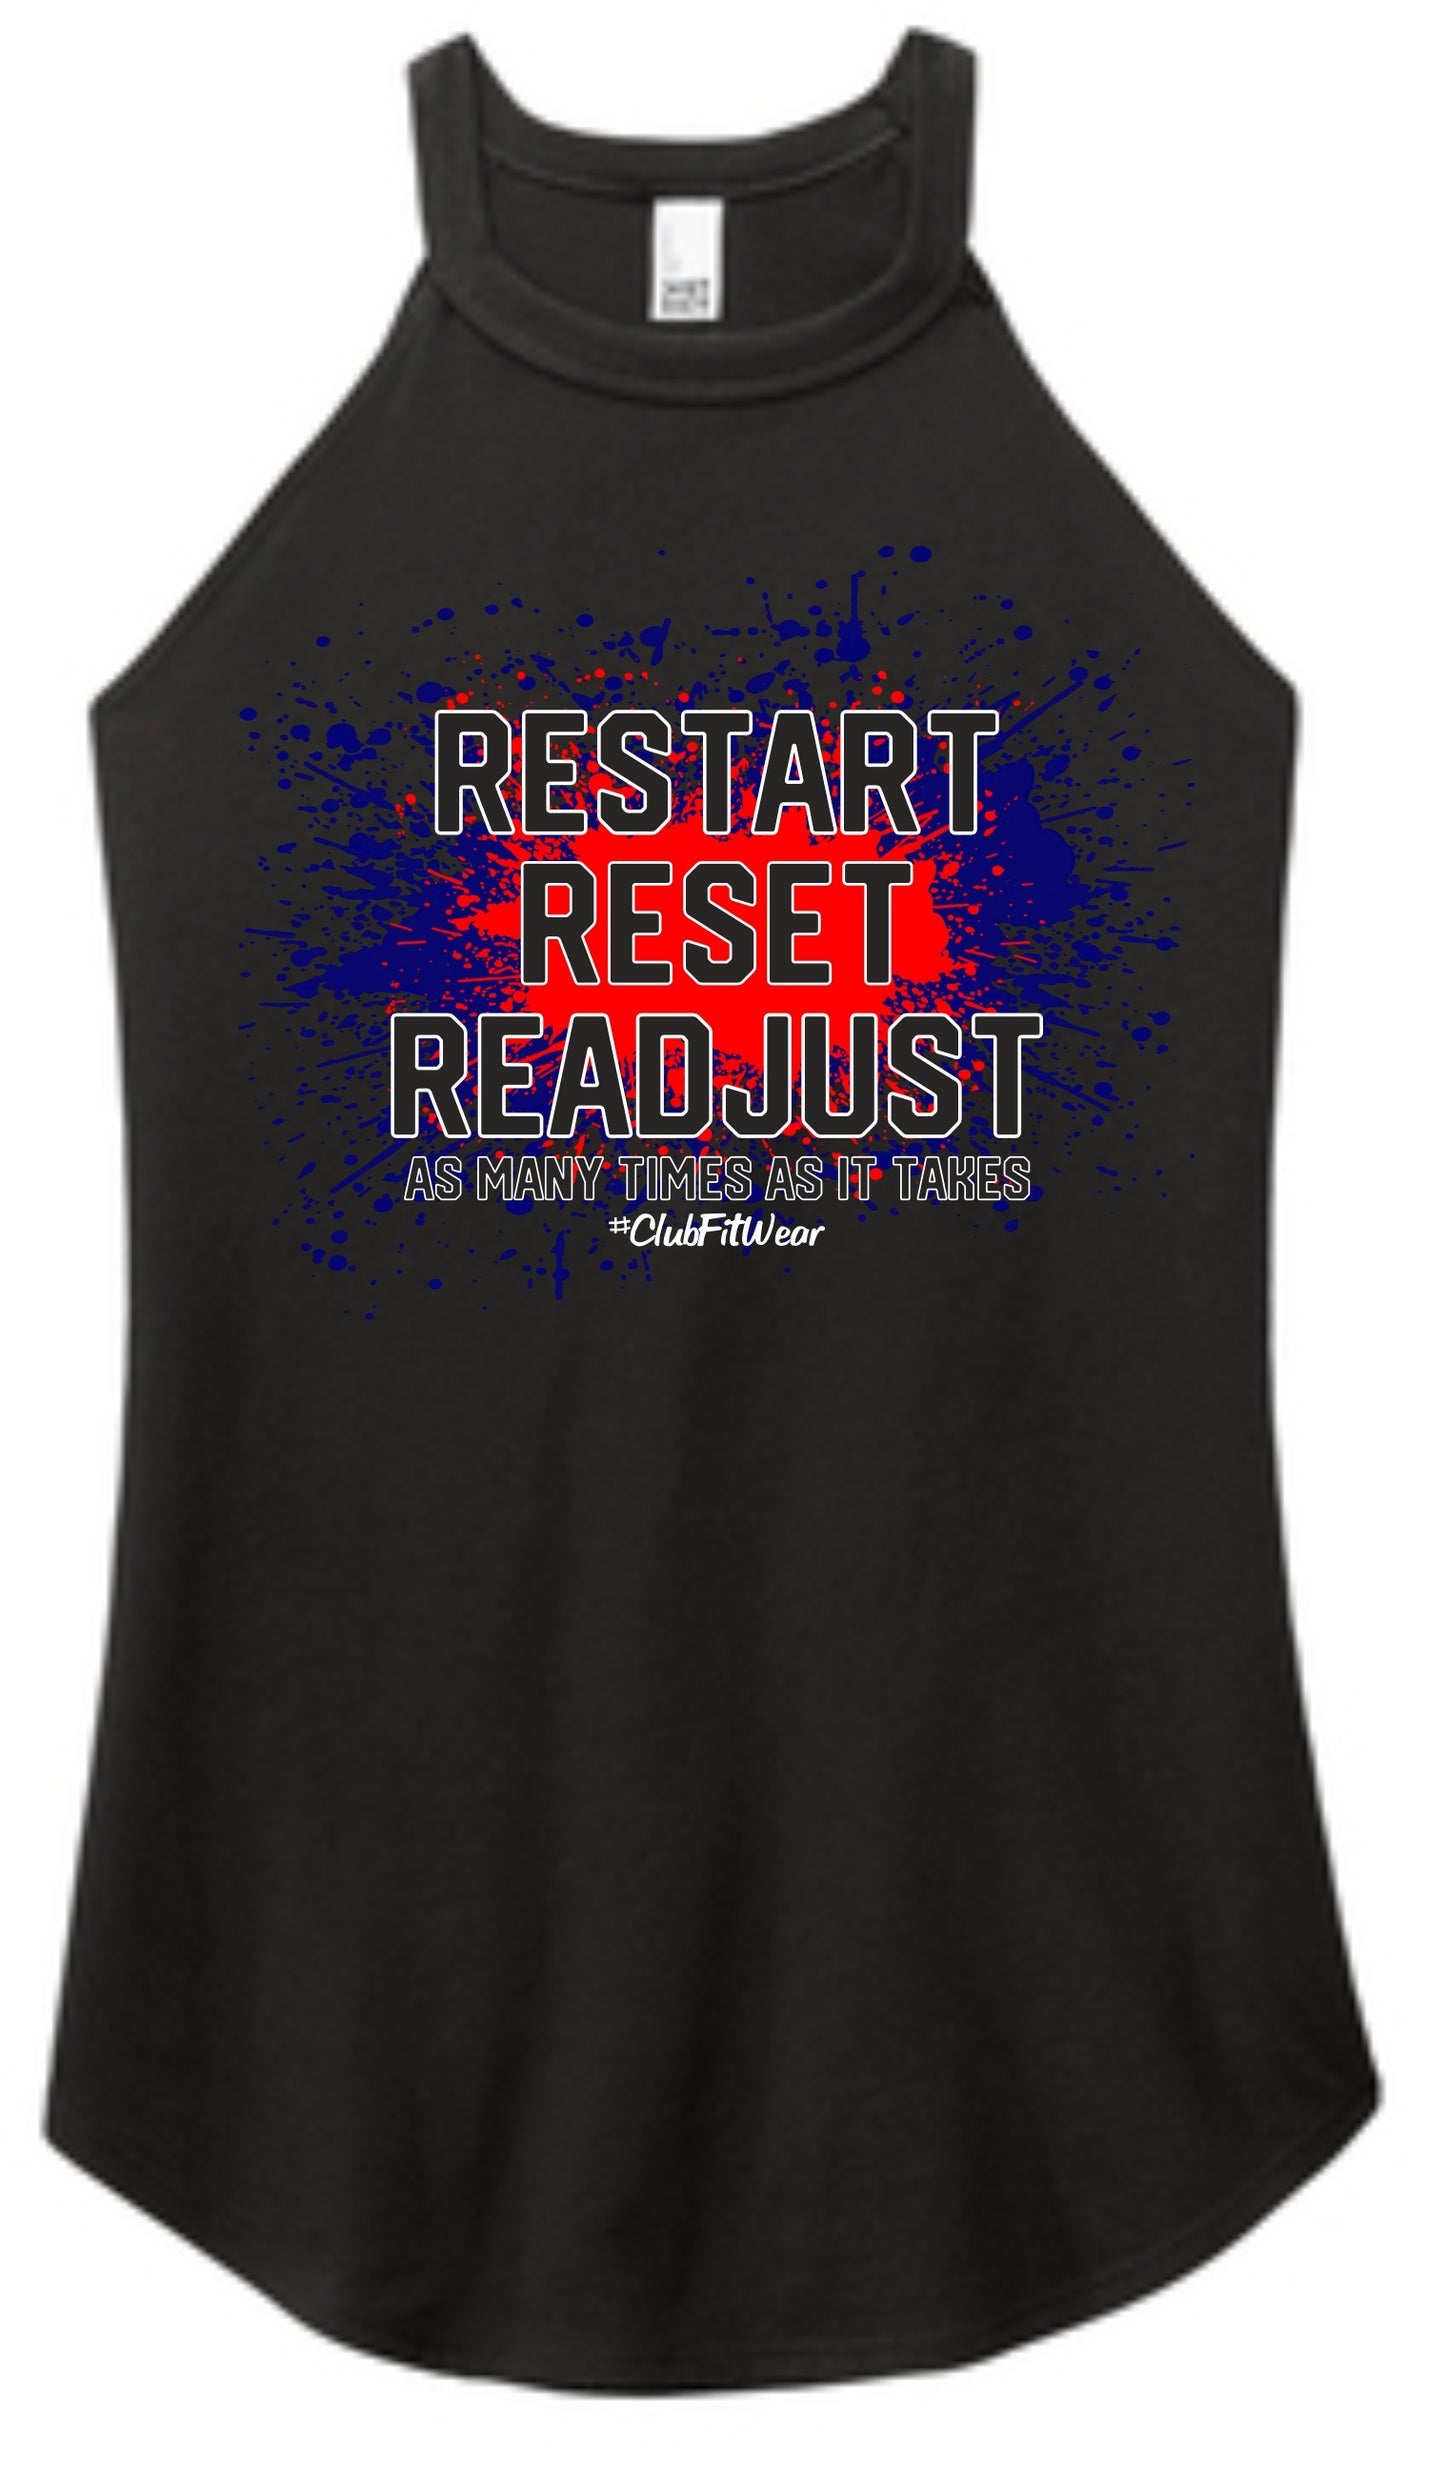 Restart Reset Readjust - High Neck Rocker Tank